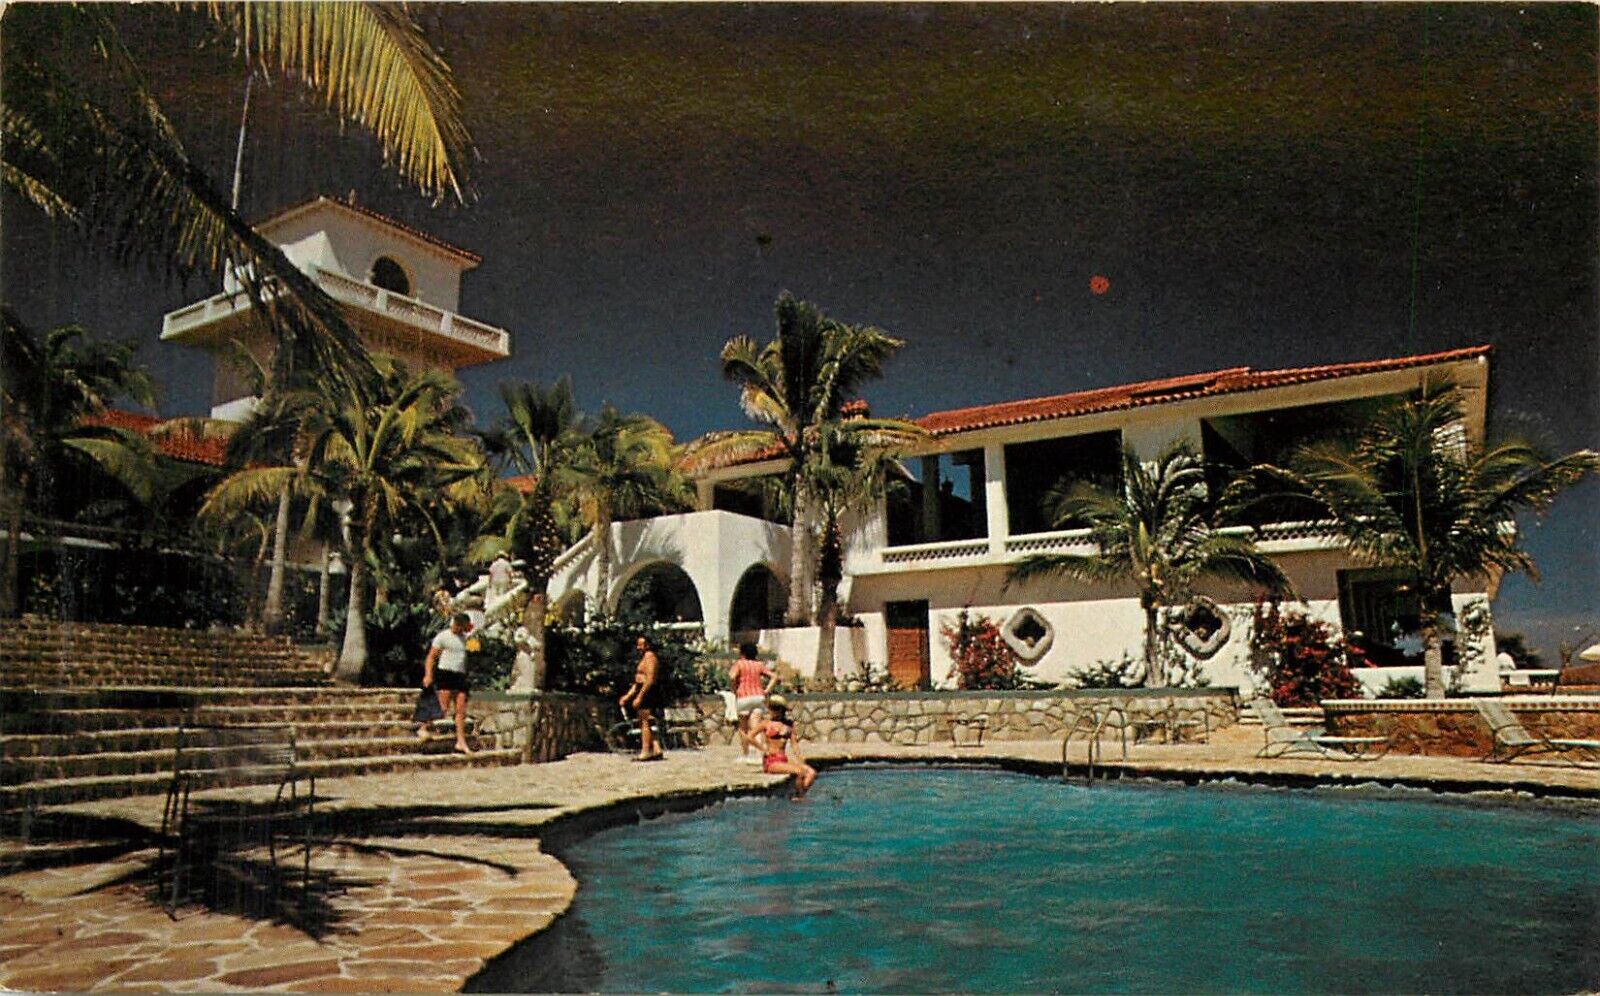 Hotel Palmilla Baja California Sur Mexico Postcard